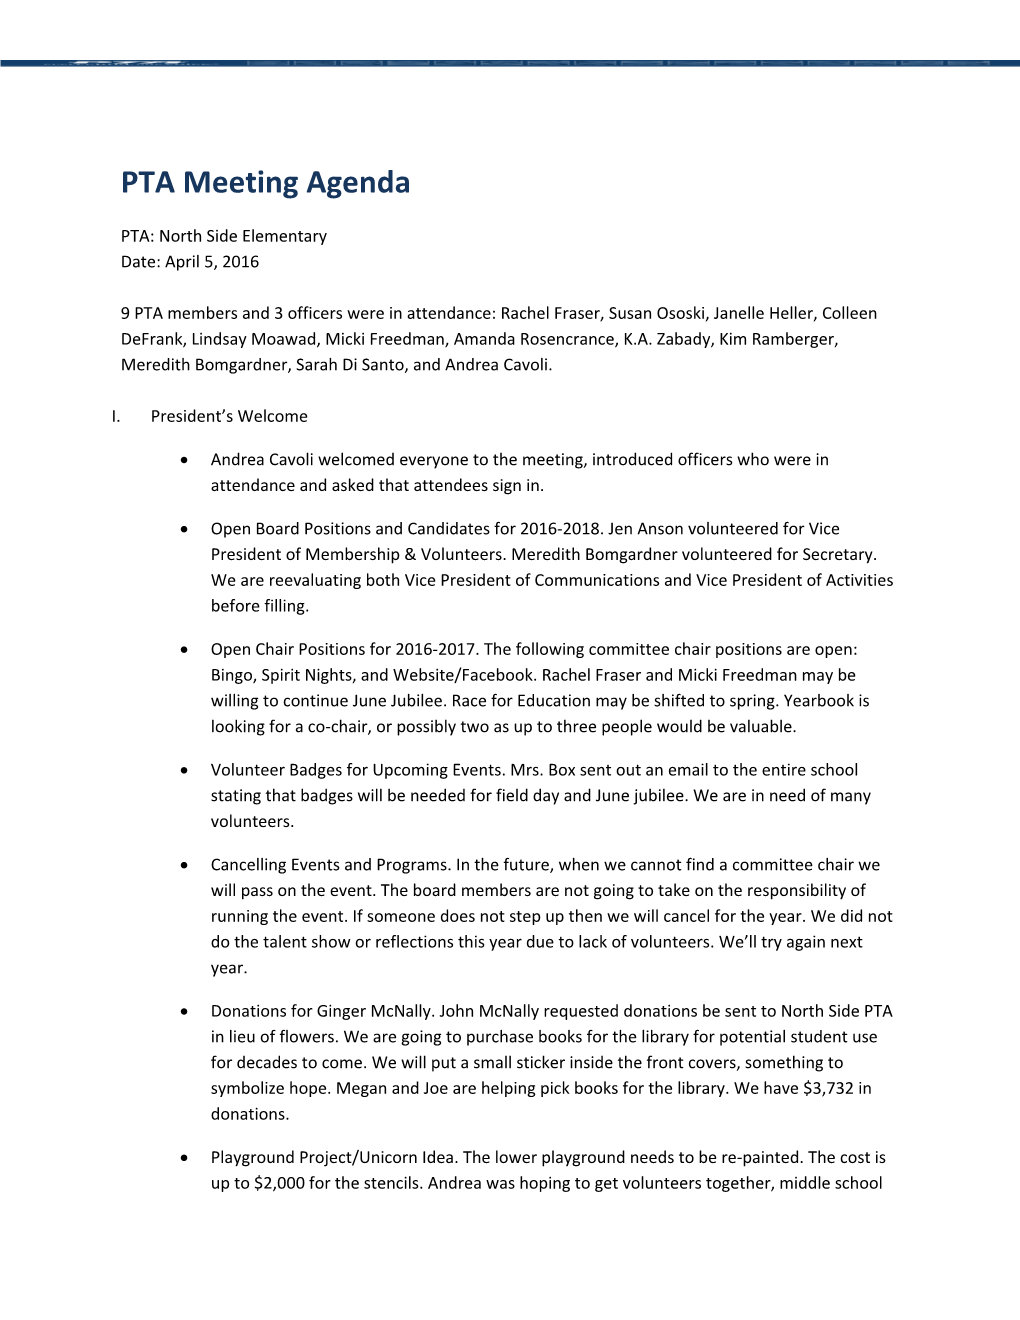 PTA Meeting Agenda s1